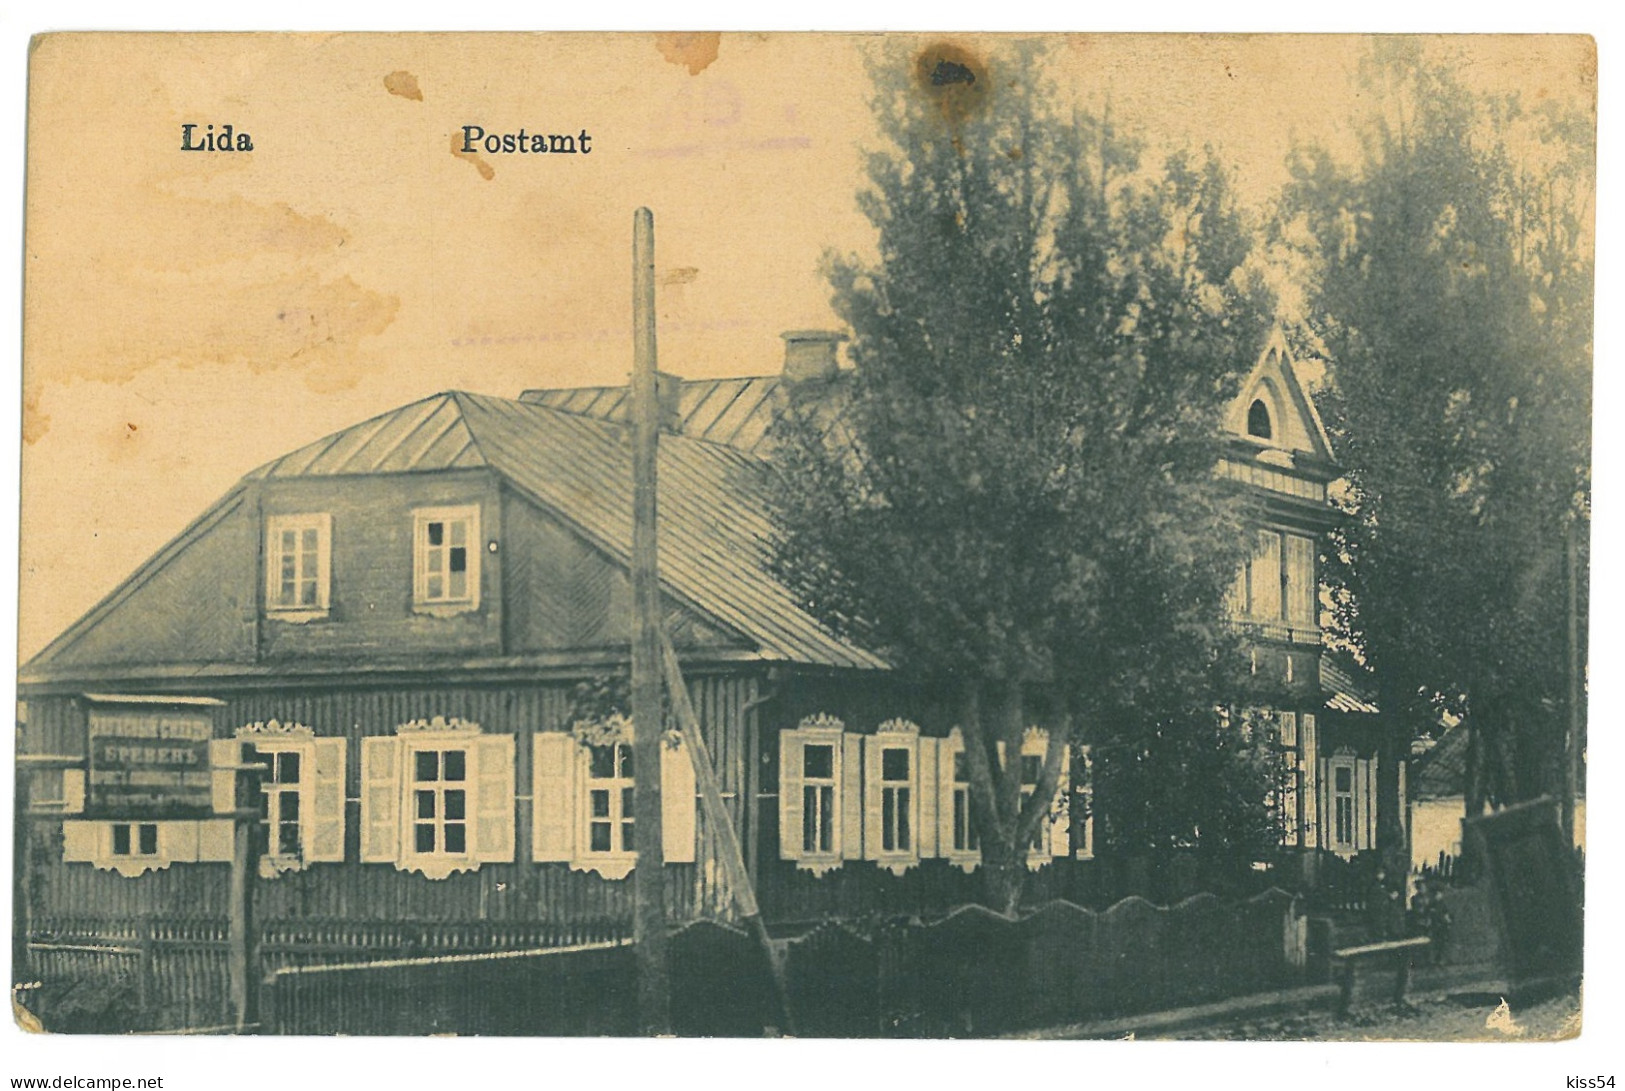 BL 29 - 24070 LIDA, Post Office, Belarus - Old Postcard - Used - 1917 - Weißrussland